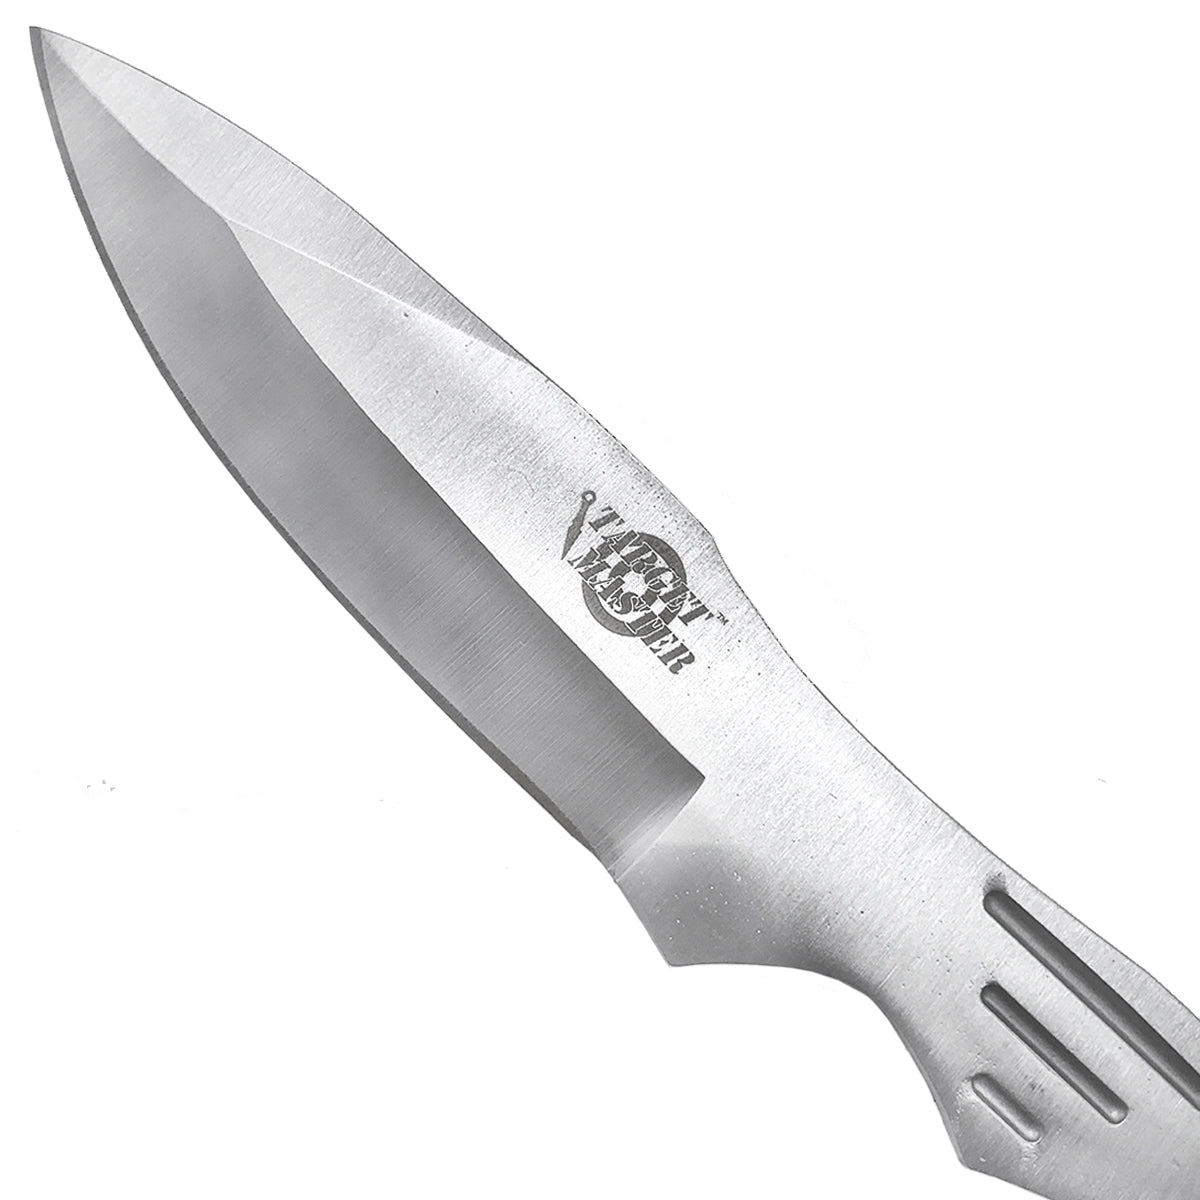 Target Master 3 Pcs Silver Throwing Knife Set 8" Overall Length W/ Nylon Sheath